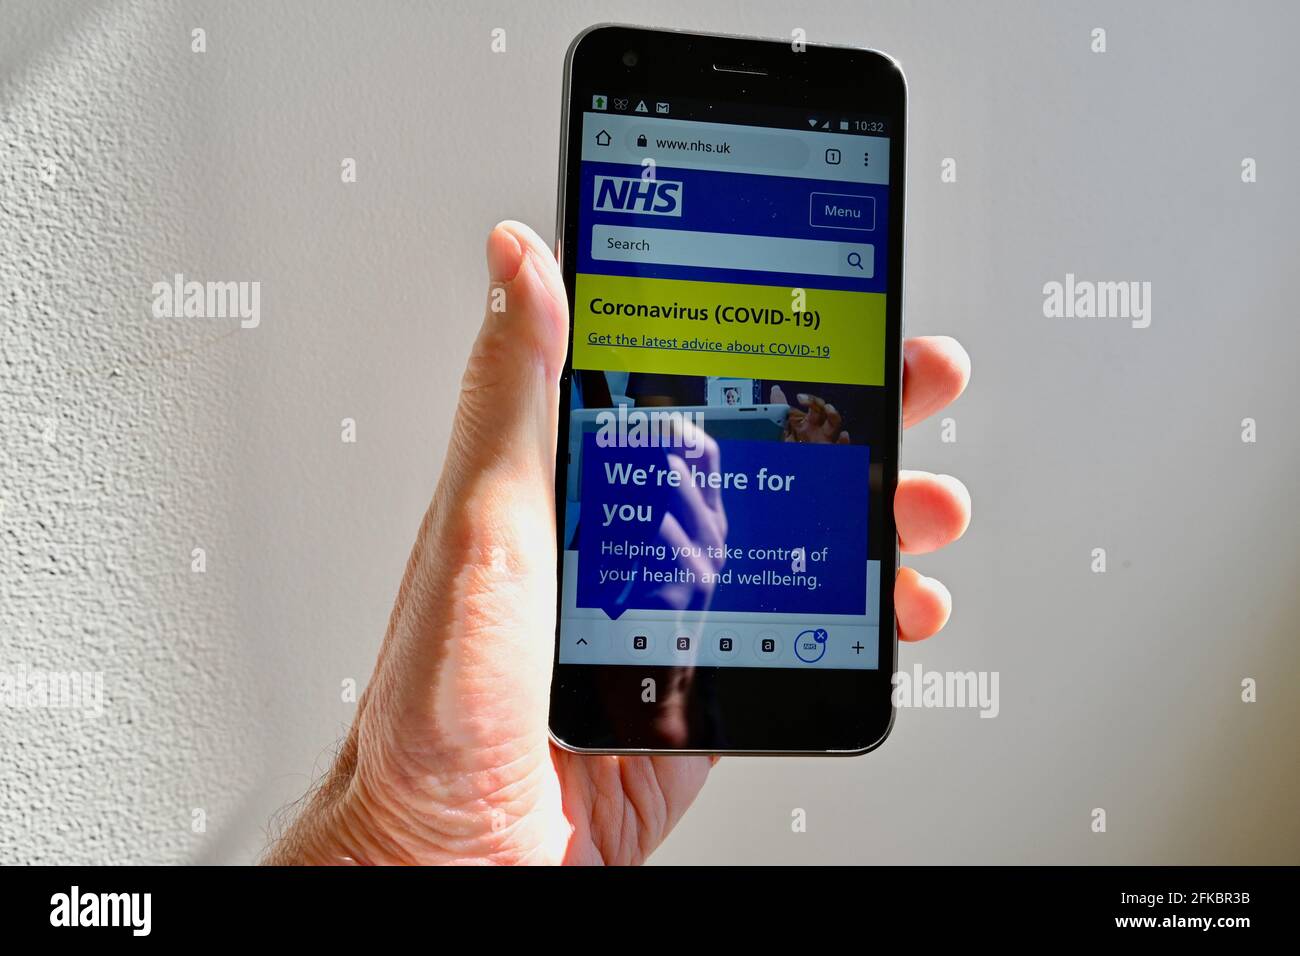 NHS Website Coronavirus (COVID-19) seen on a mobile phone. Stock Photo